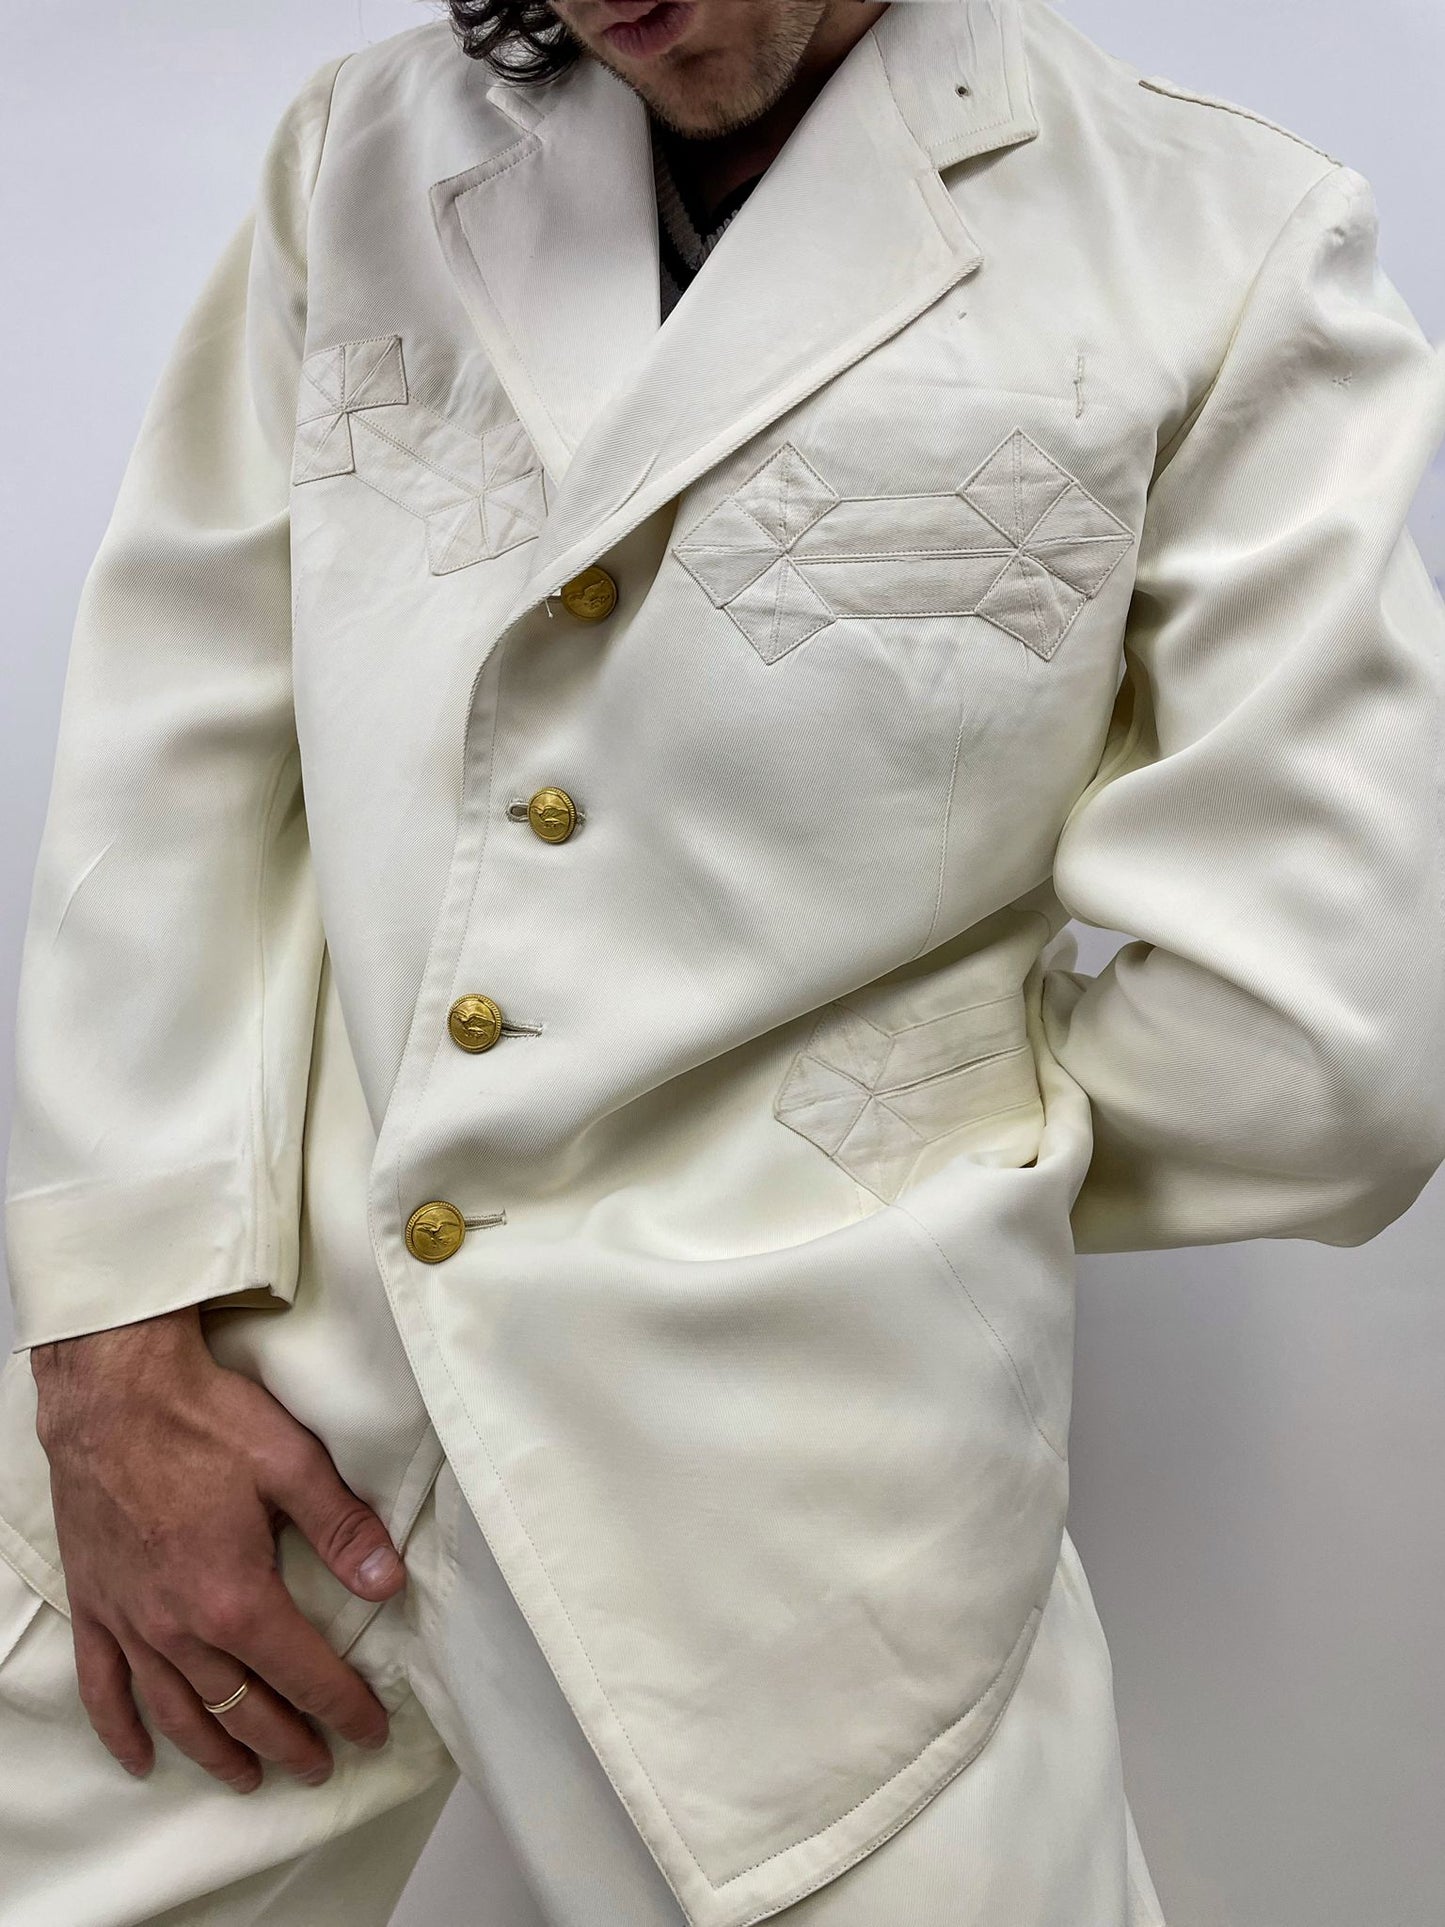 Navy suit - Bennici tailoring